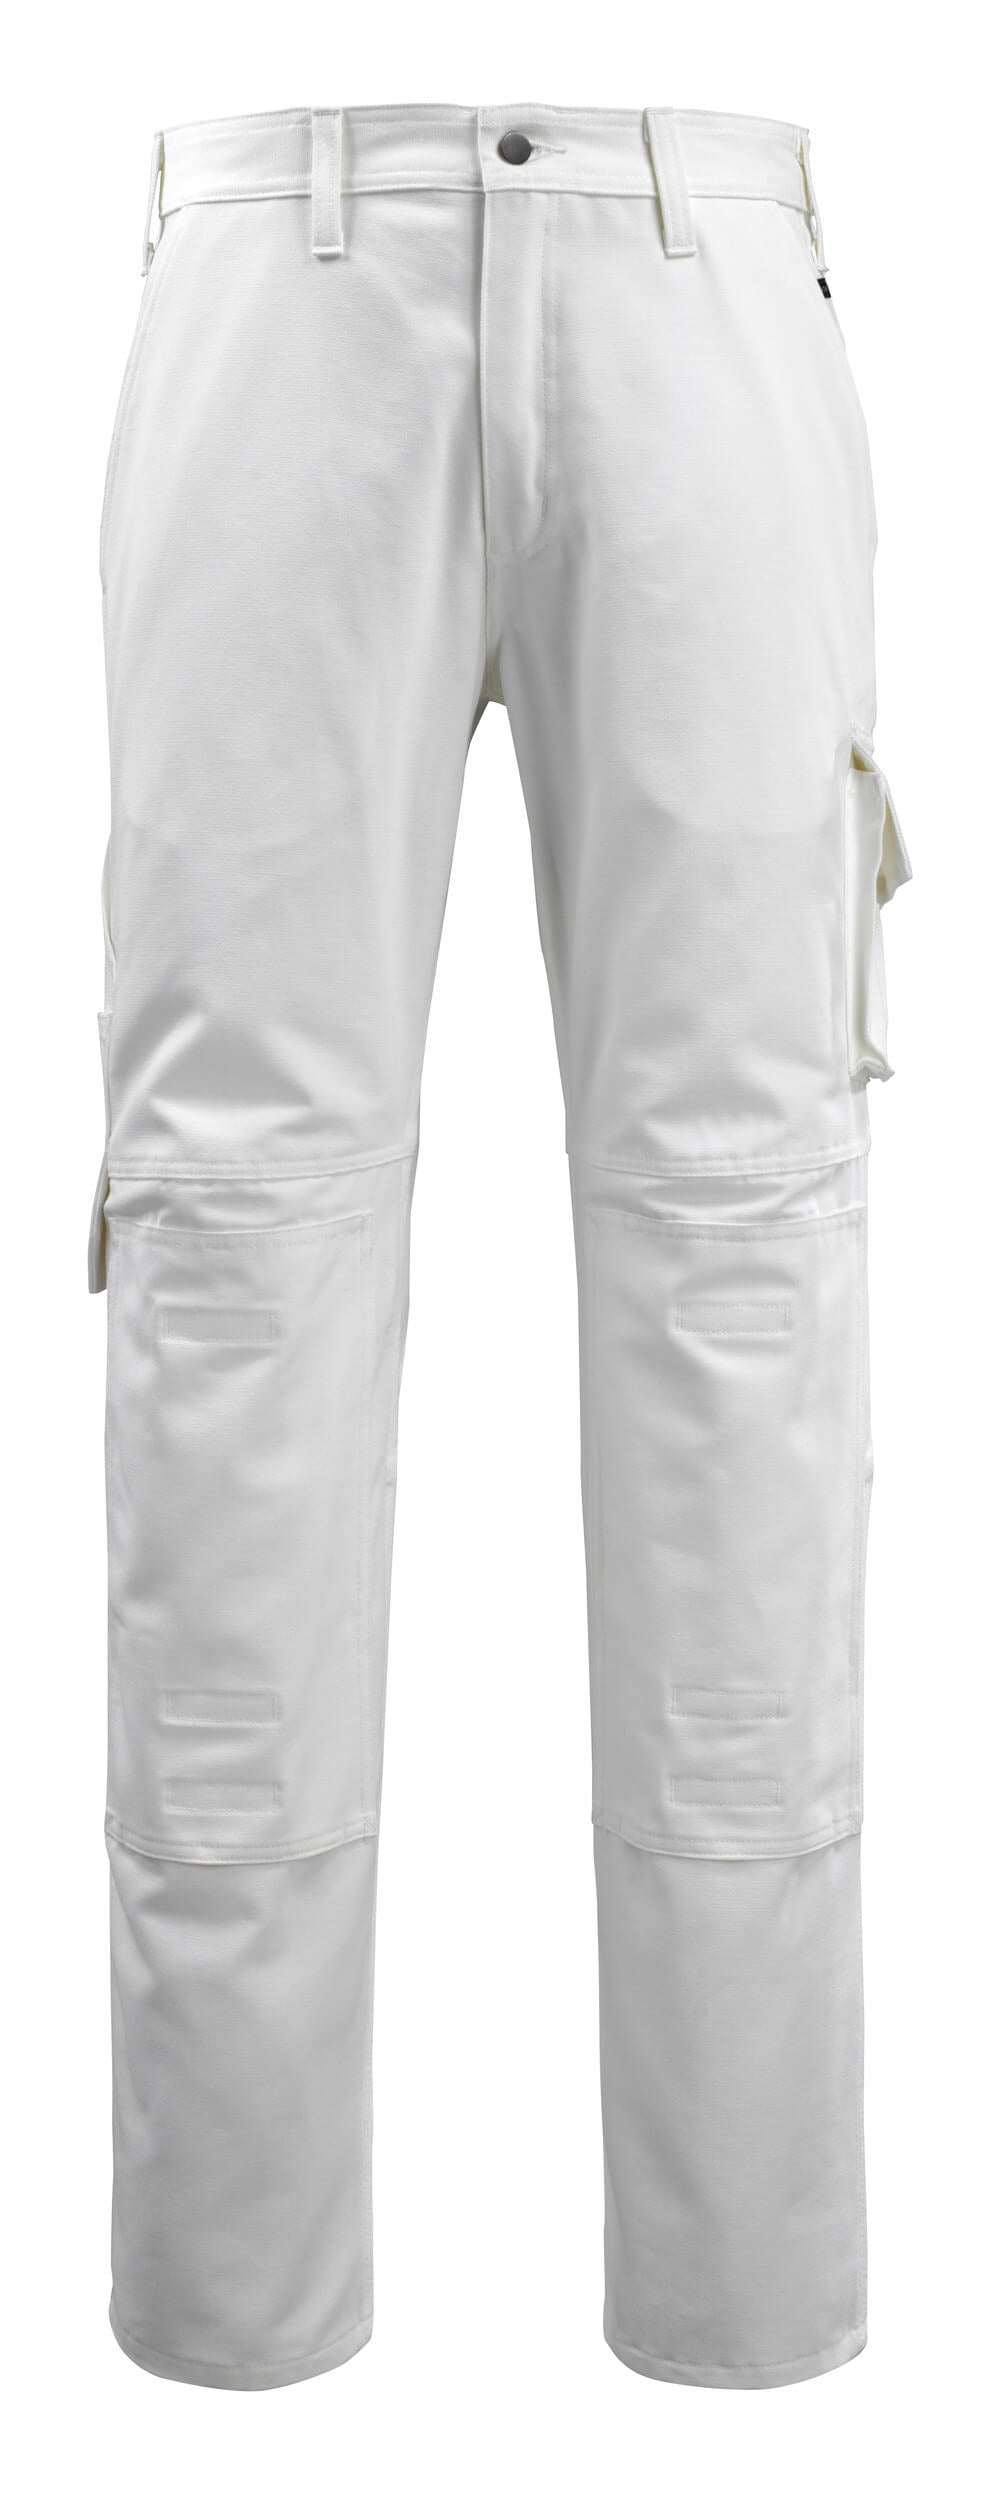 MACMICHAEL® WORKWEAR Jardim Trousers with kneepad pockets 14579 white